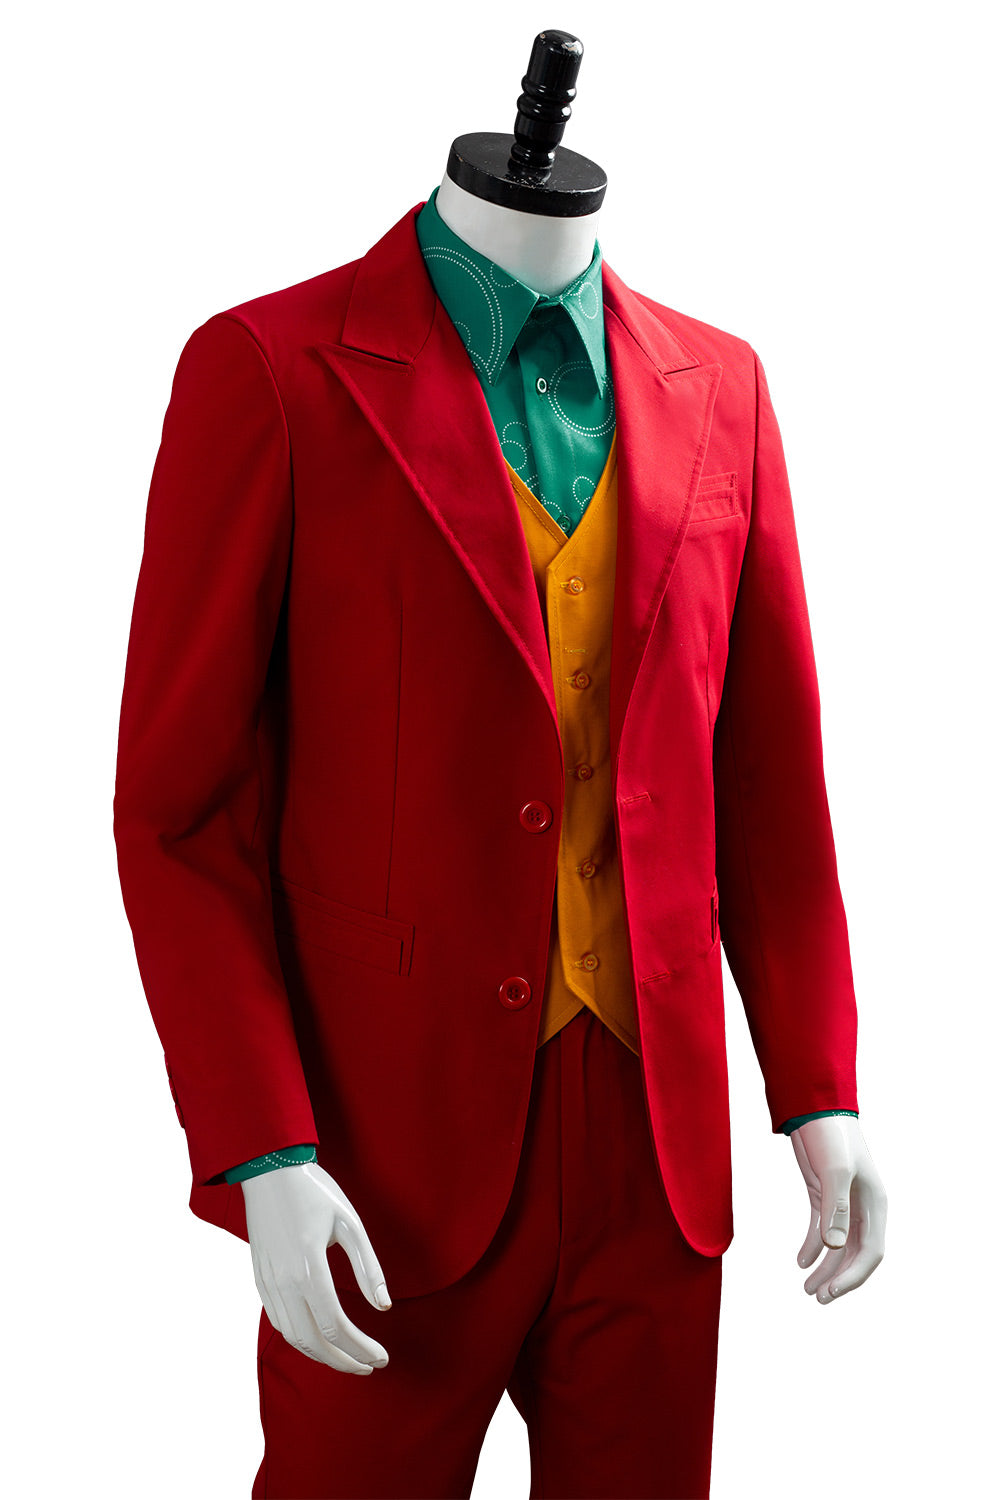 Joker 2019 Film Joaquin Phoenix Arthur Fleck Cosplay Kostüm Version B Erwachsene